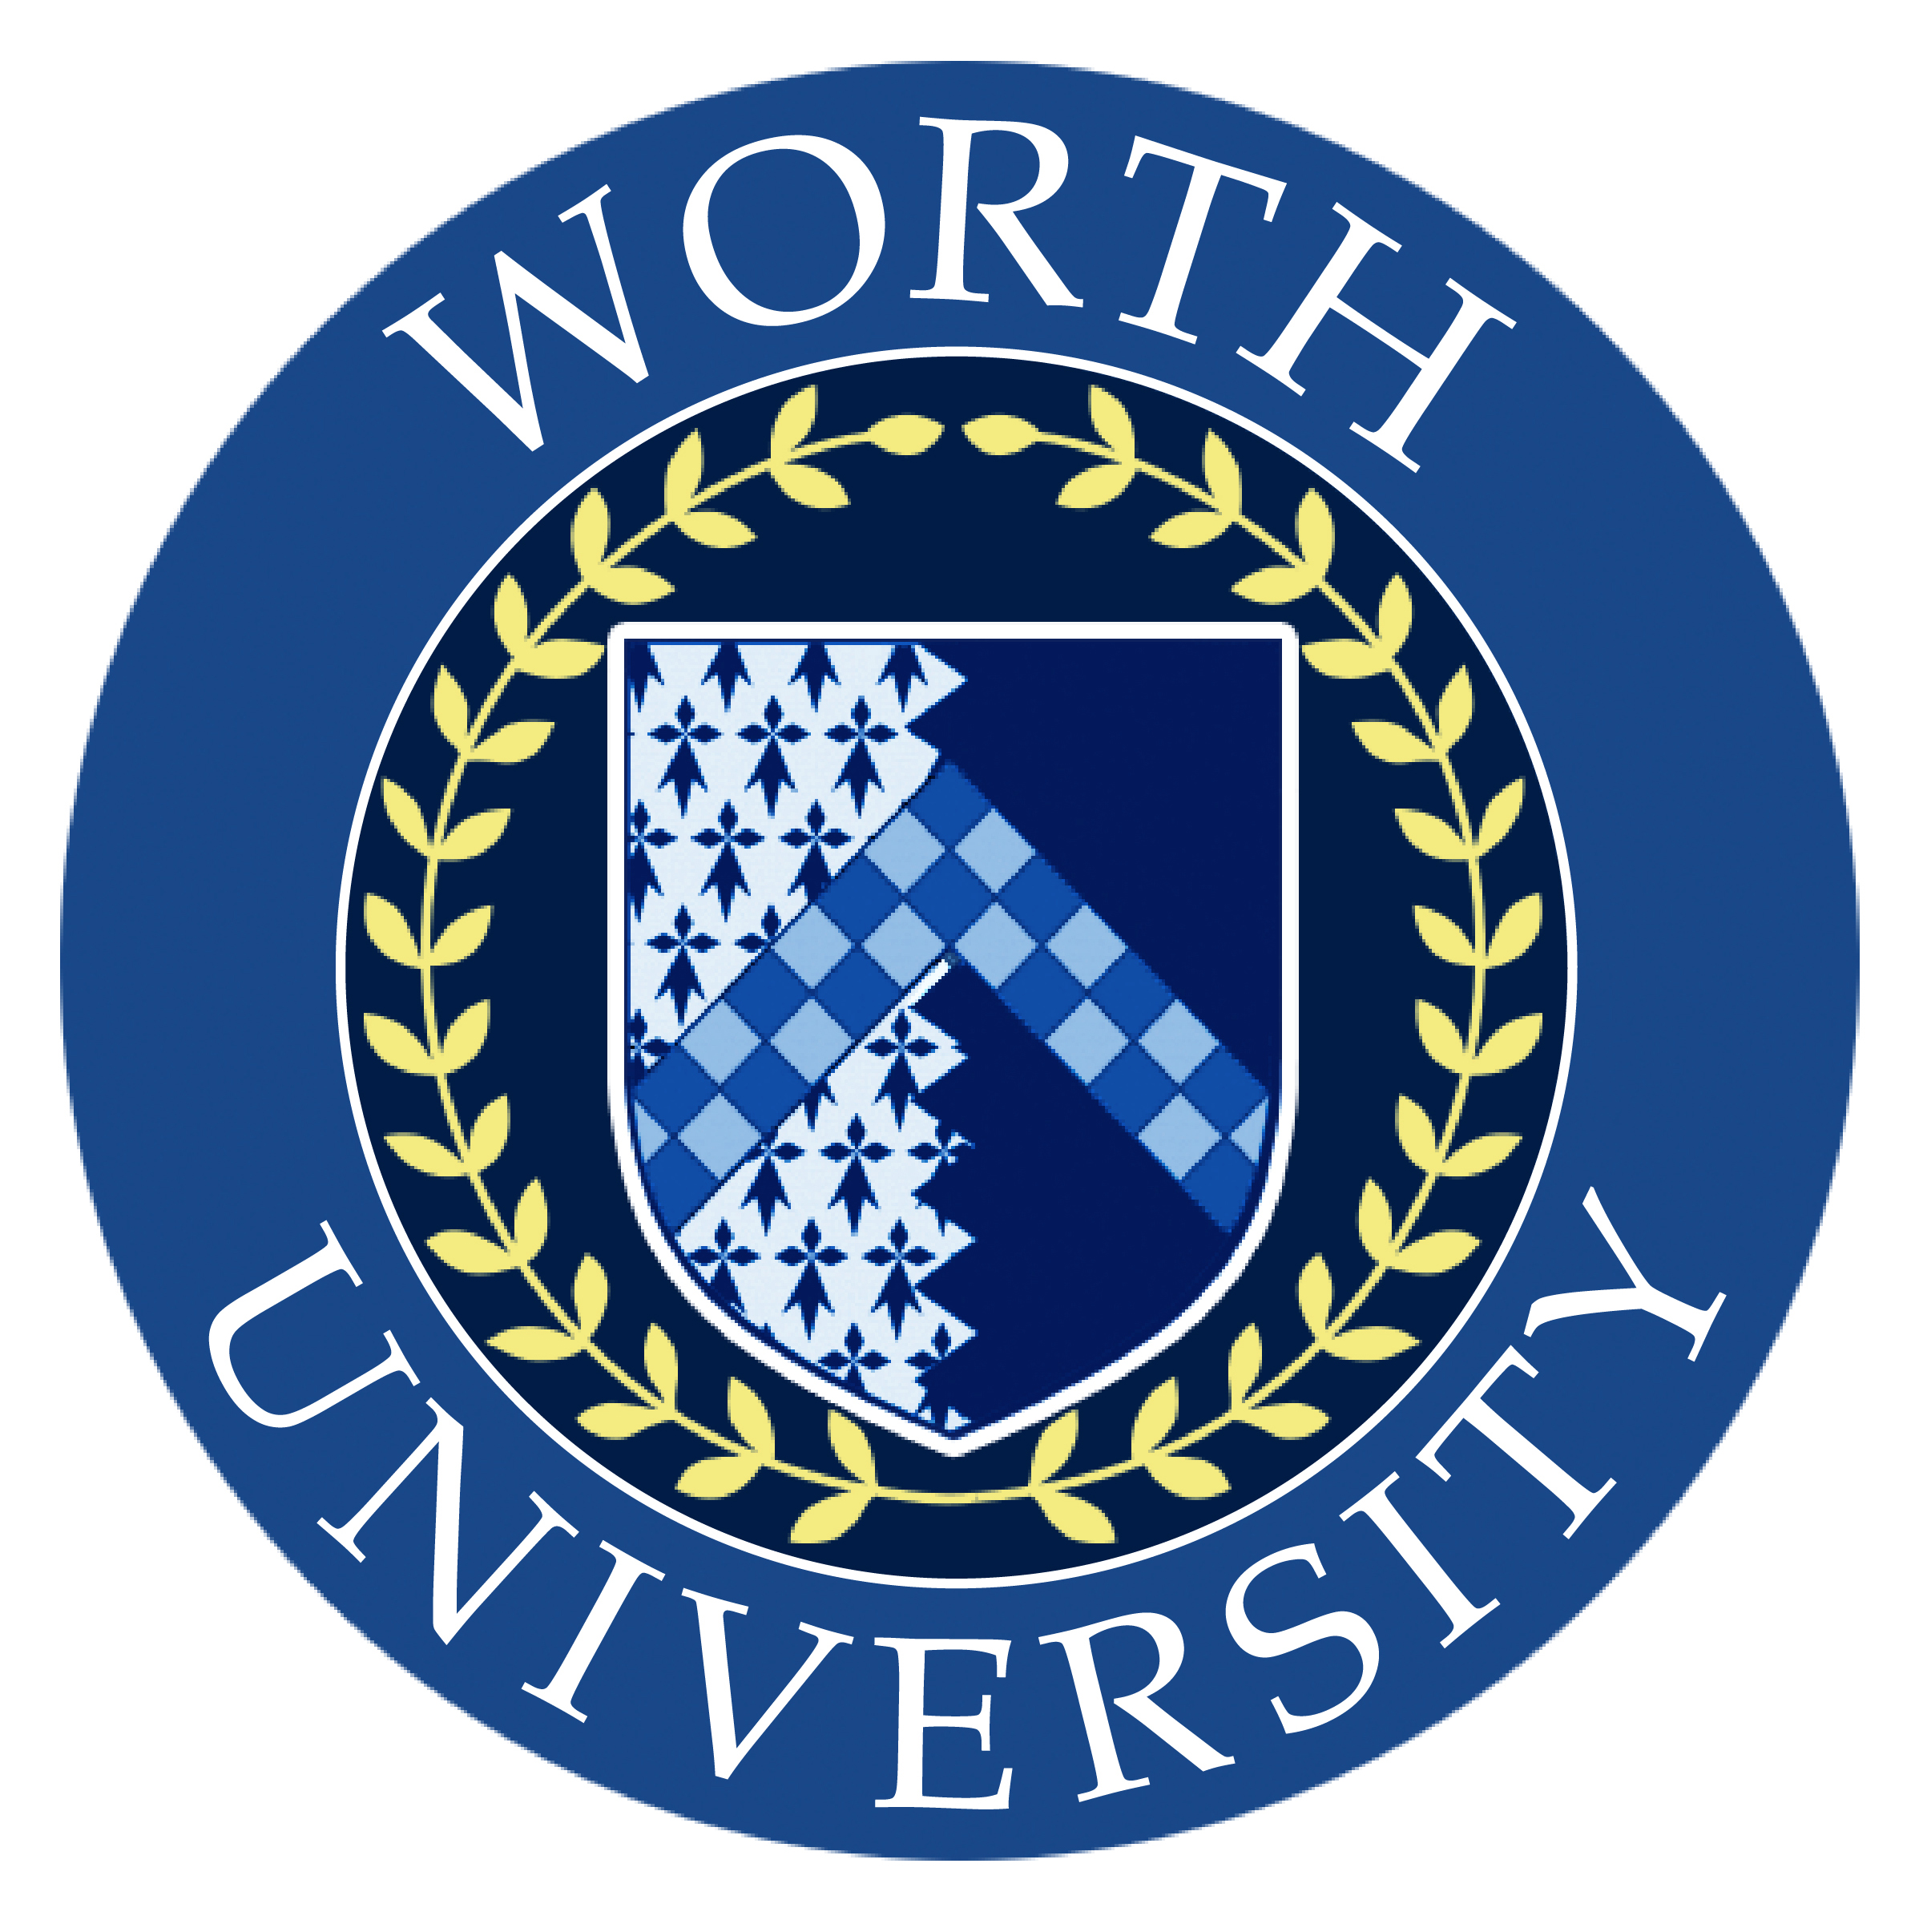 Worth University